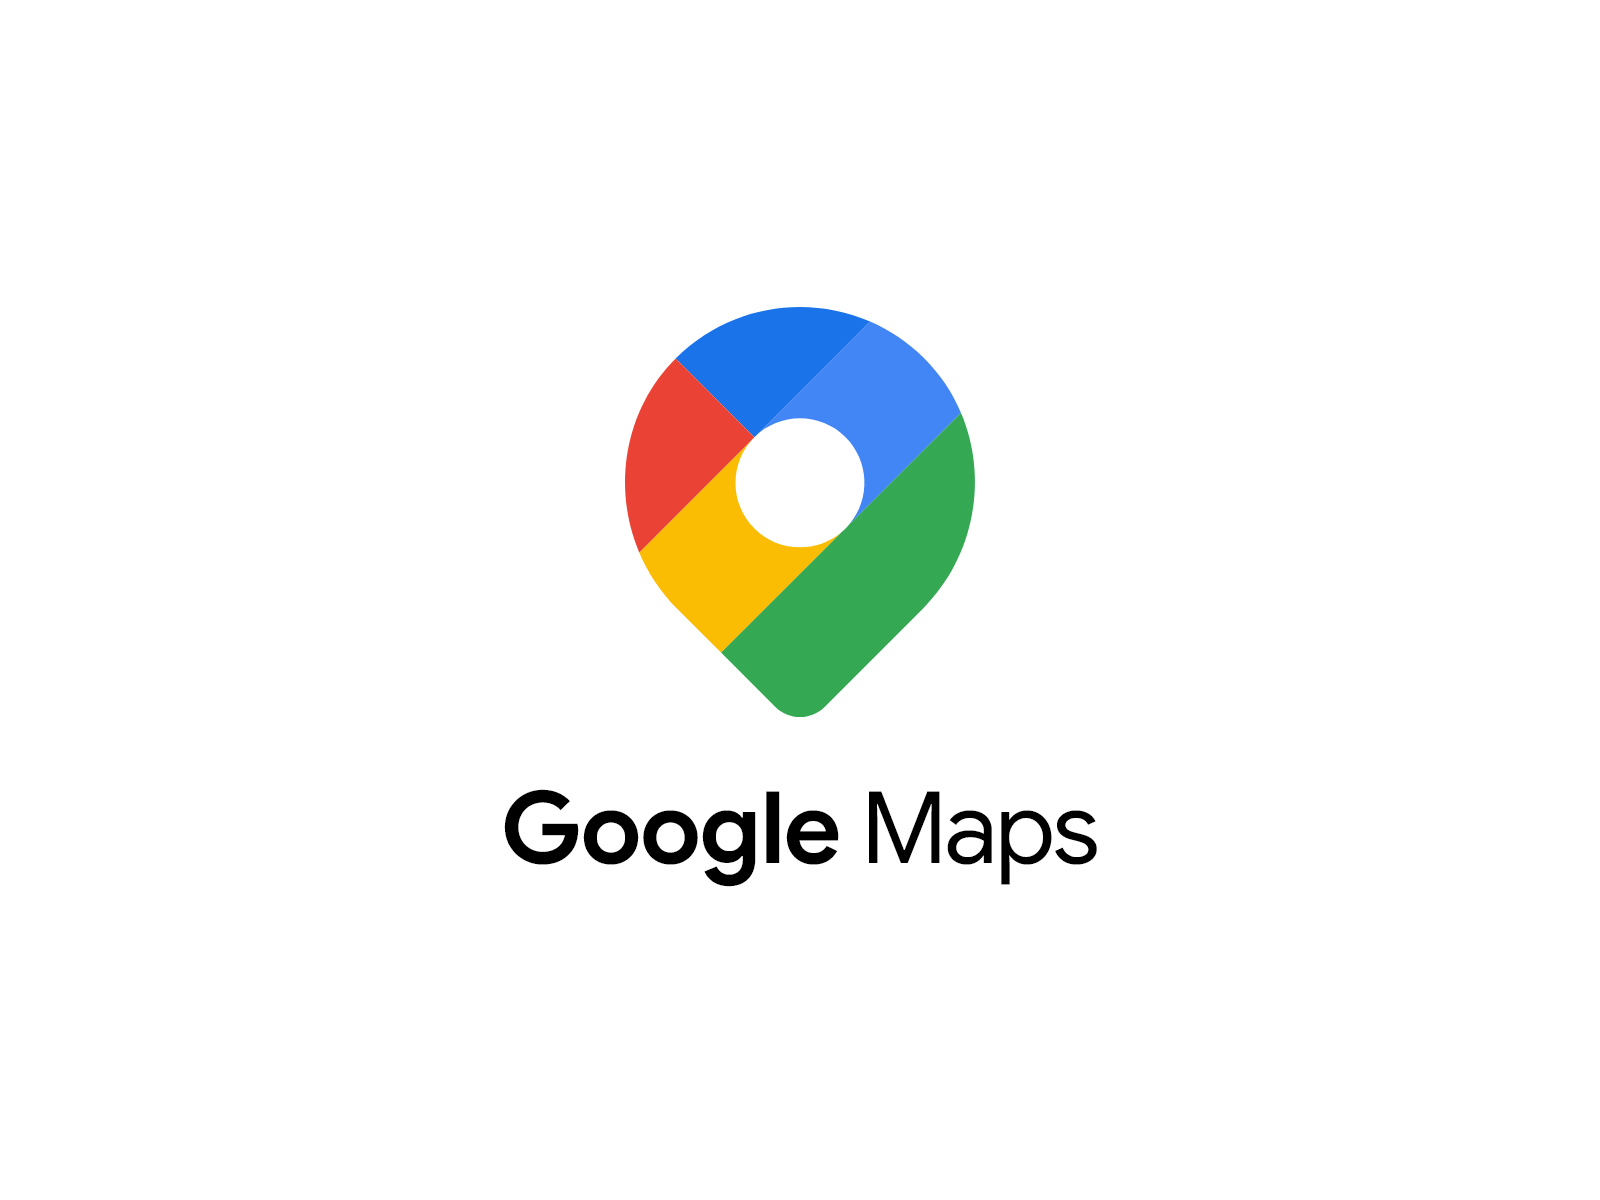 Google Maps Logo Redesign By Faizan Zahoor On Dribbble